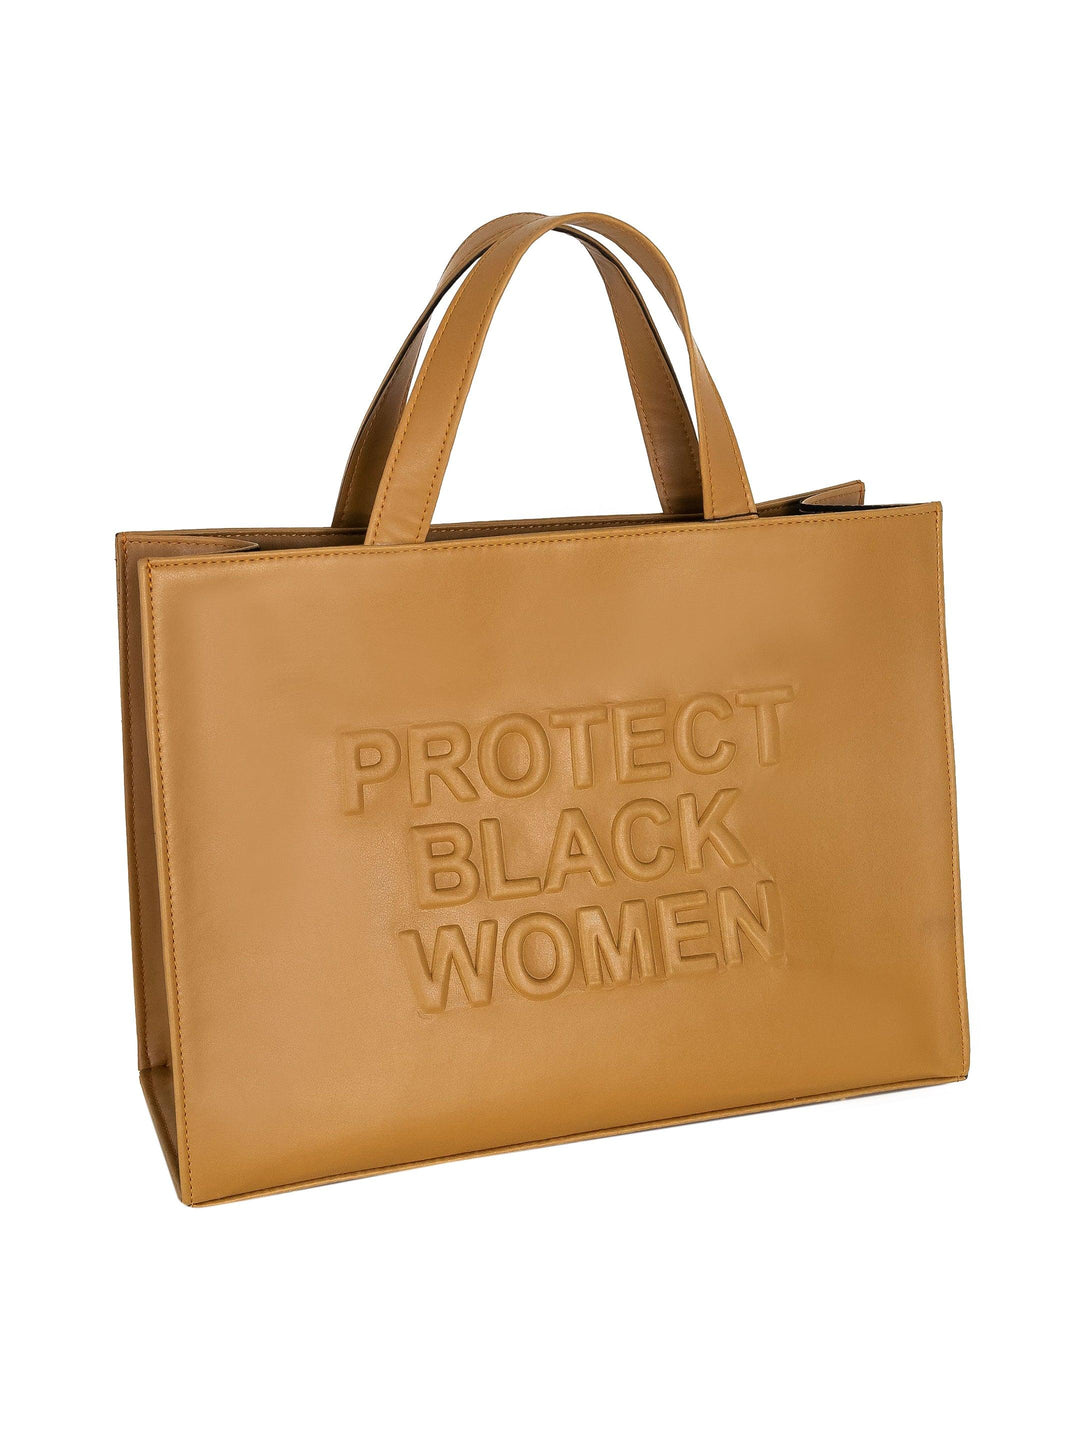 Protect Black Women Bag- Vegan Caramel